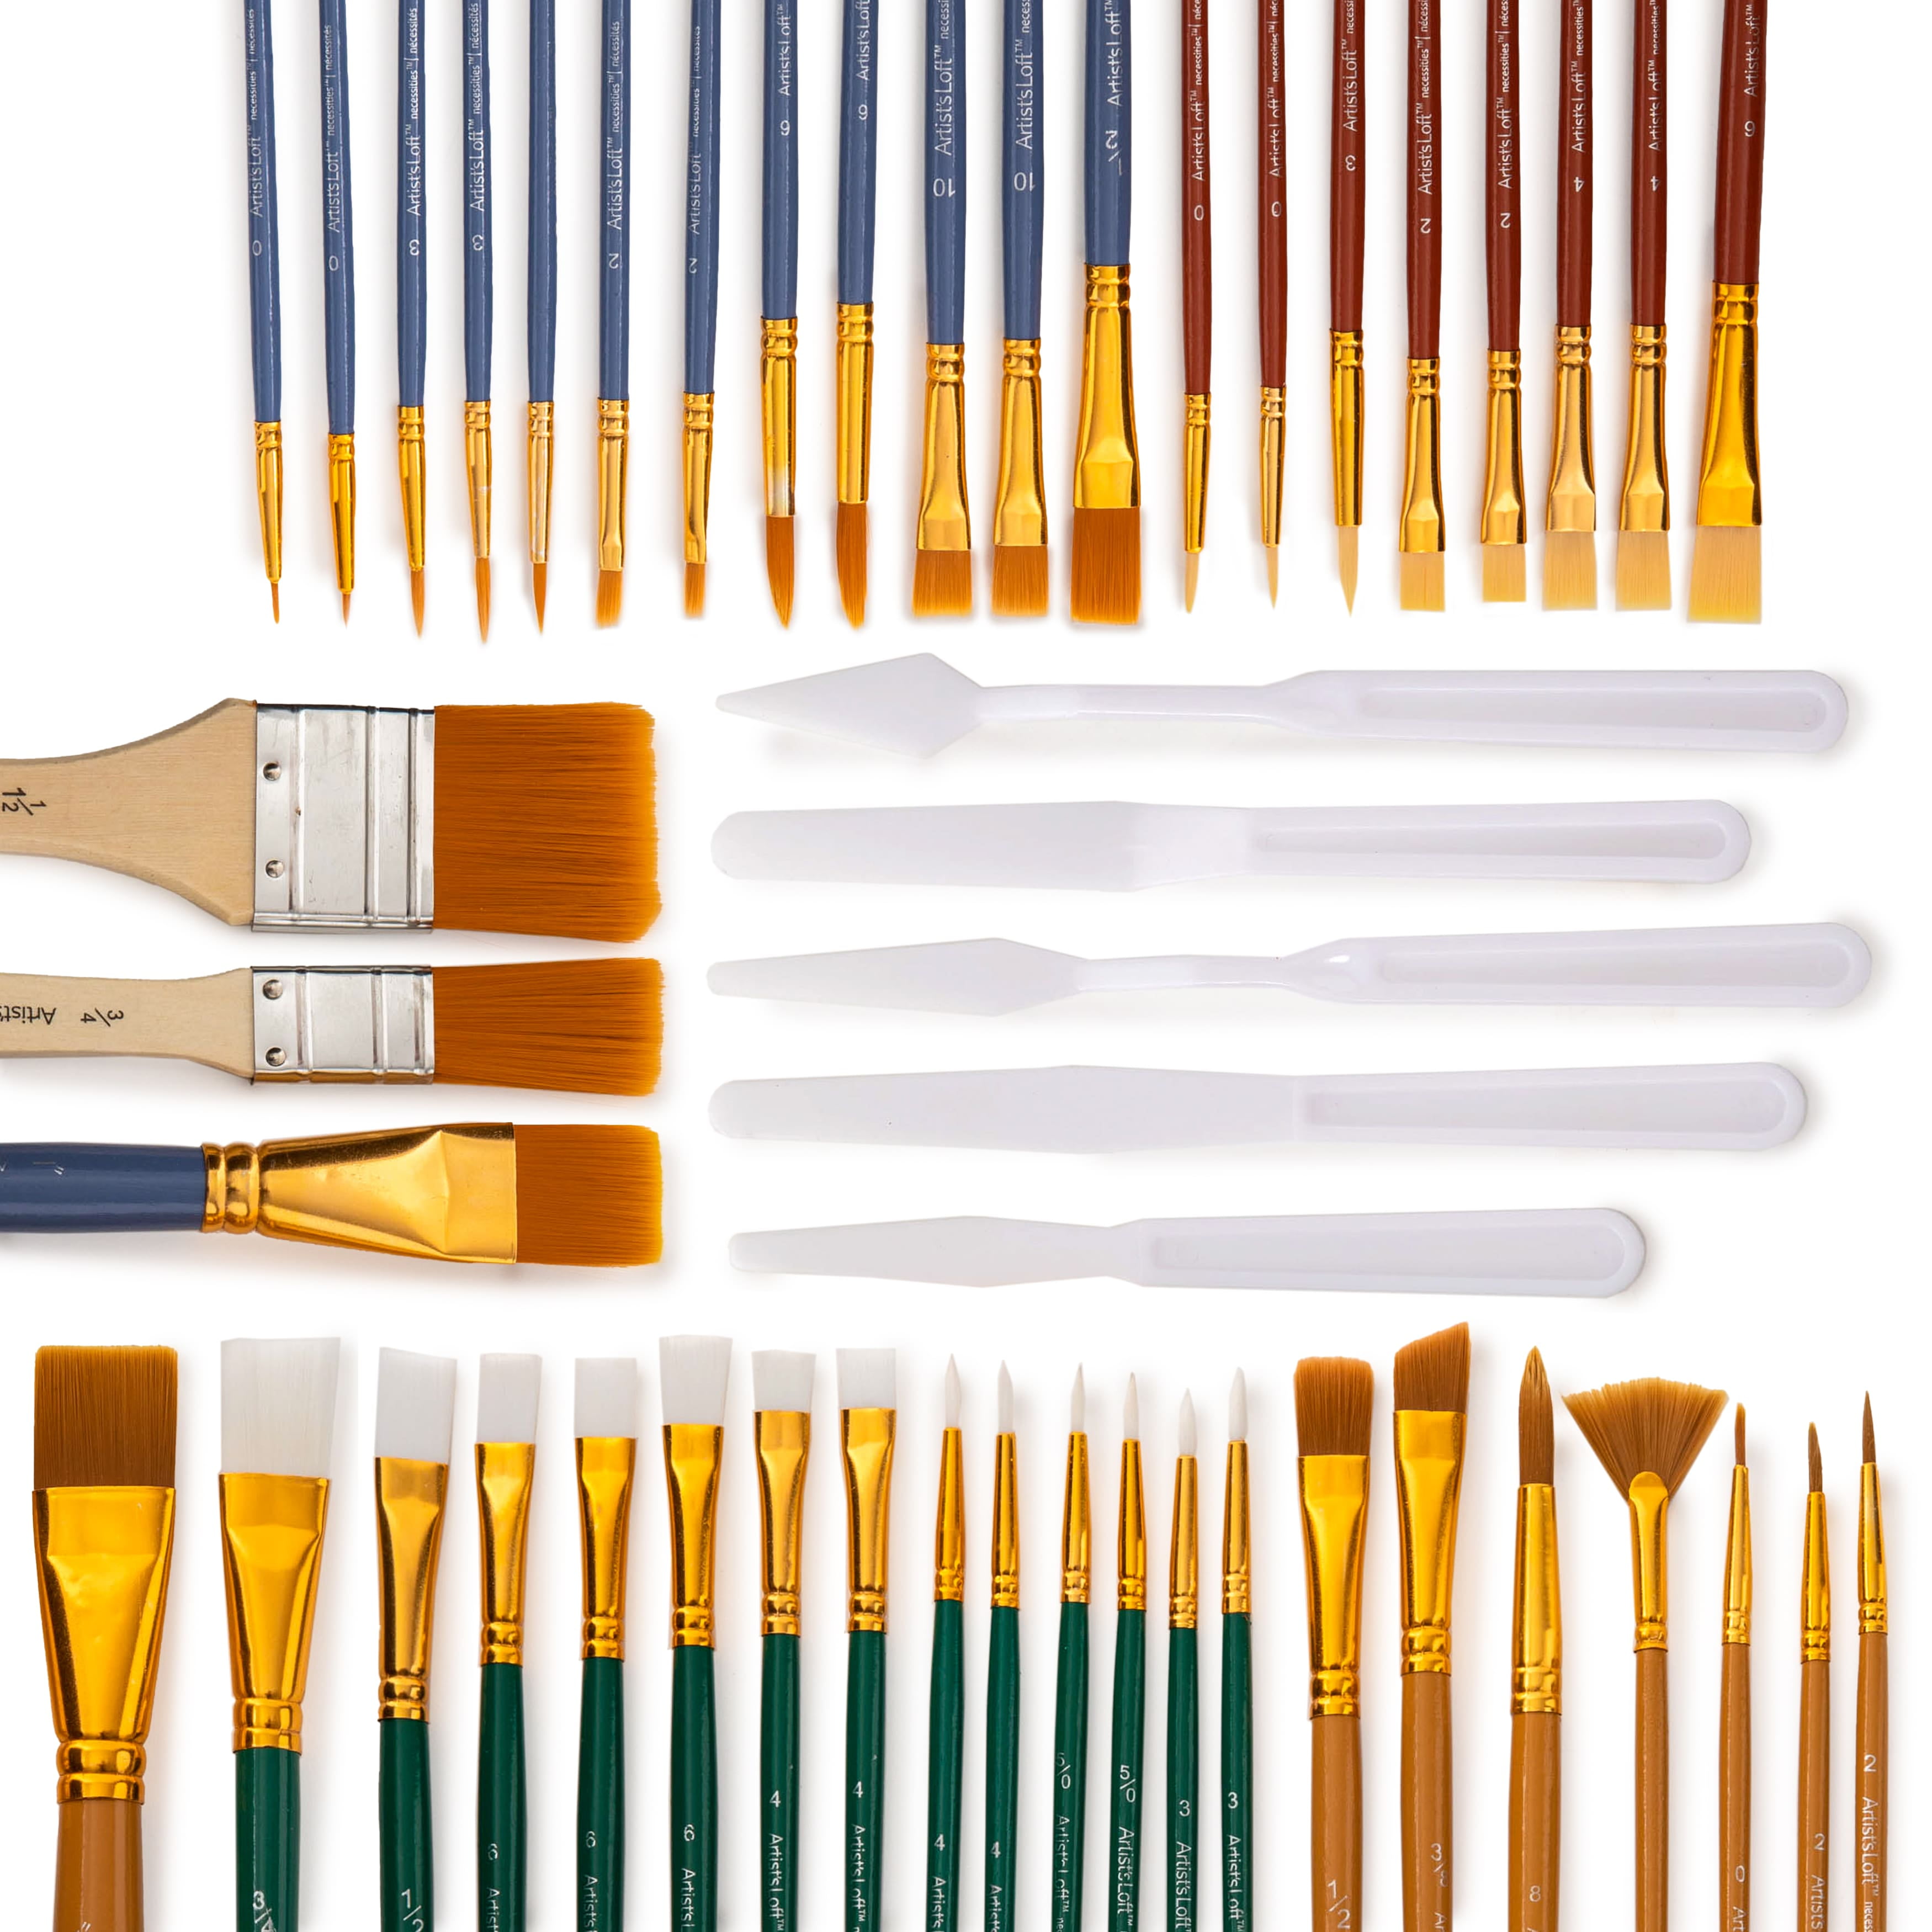 Set of paint brushes or disposable brushes, 5 units sizes: 19, 25